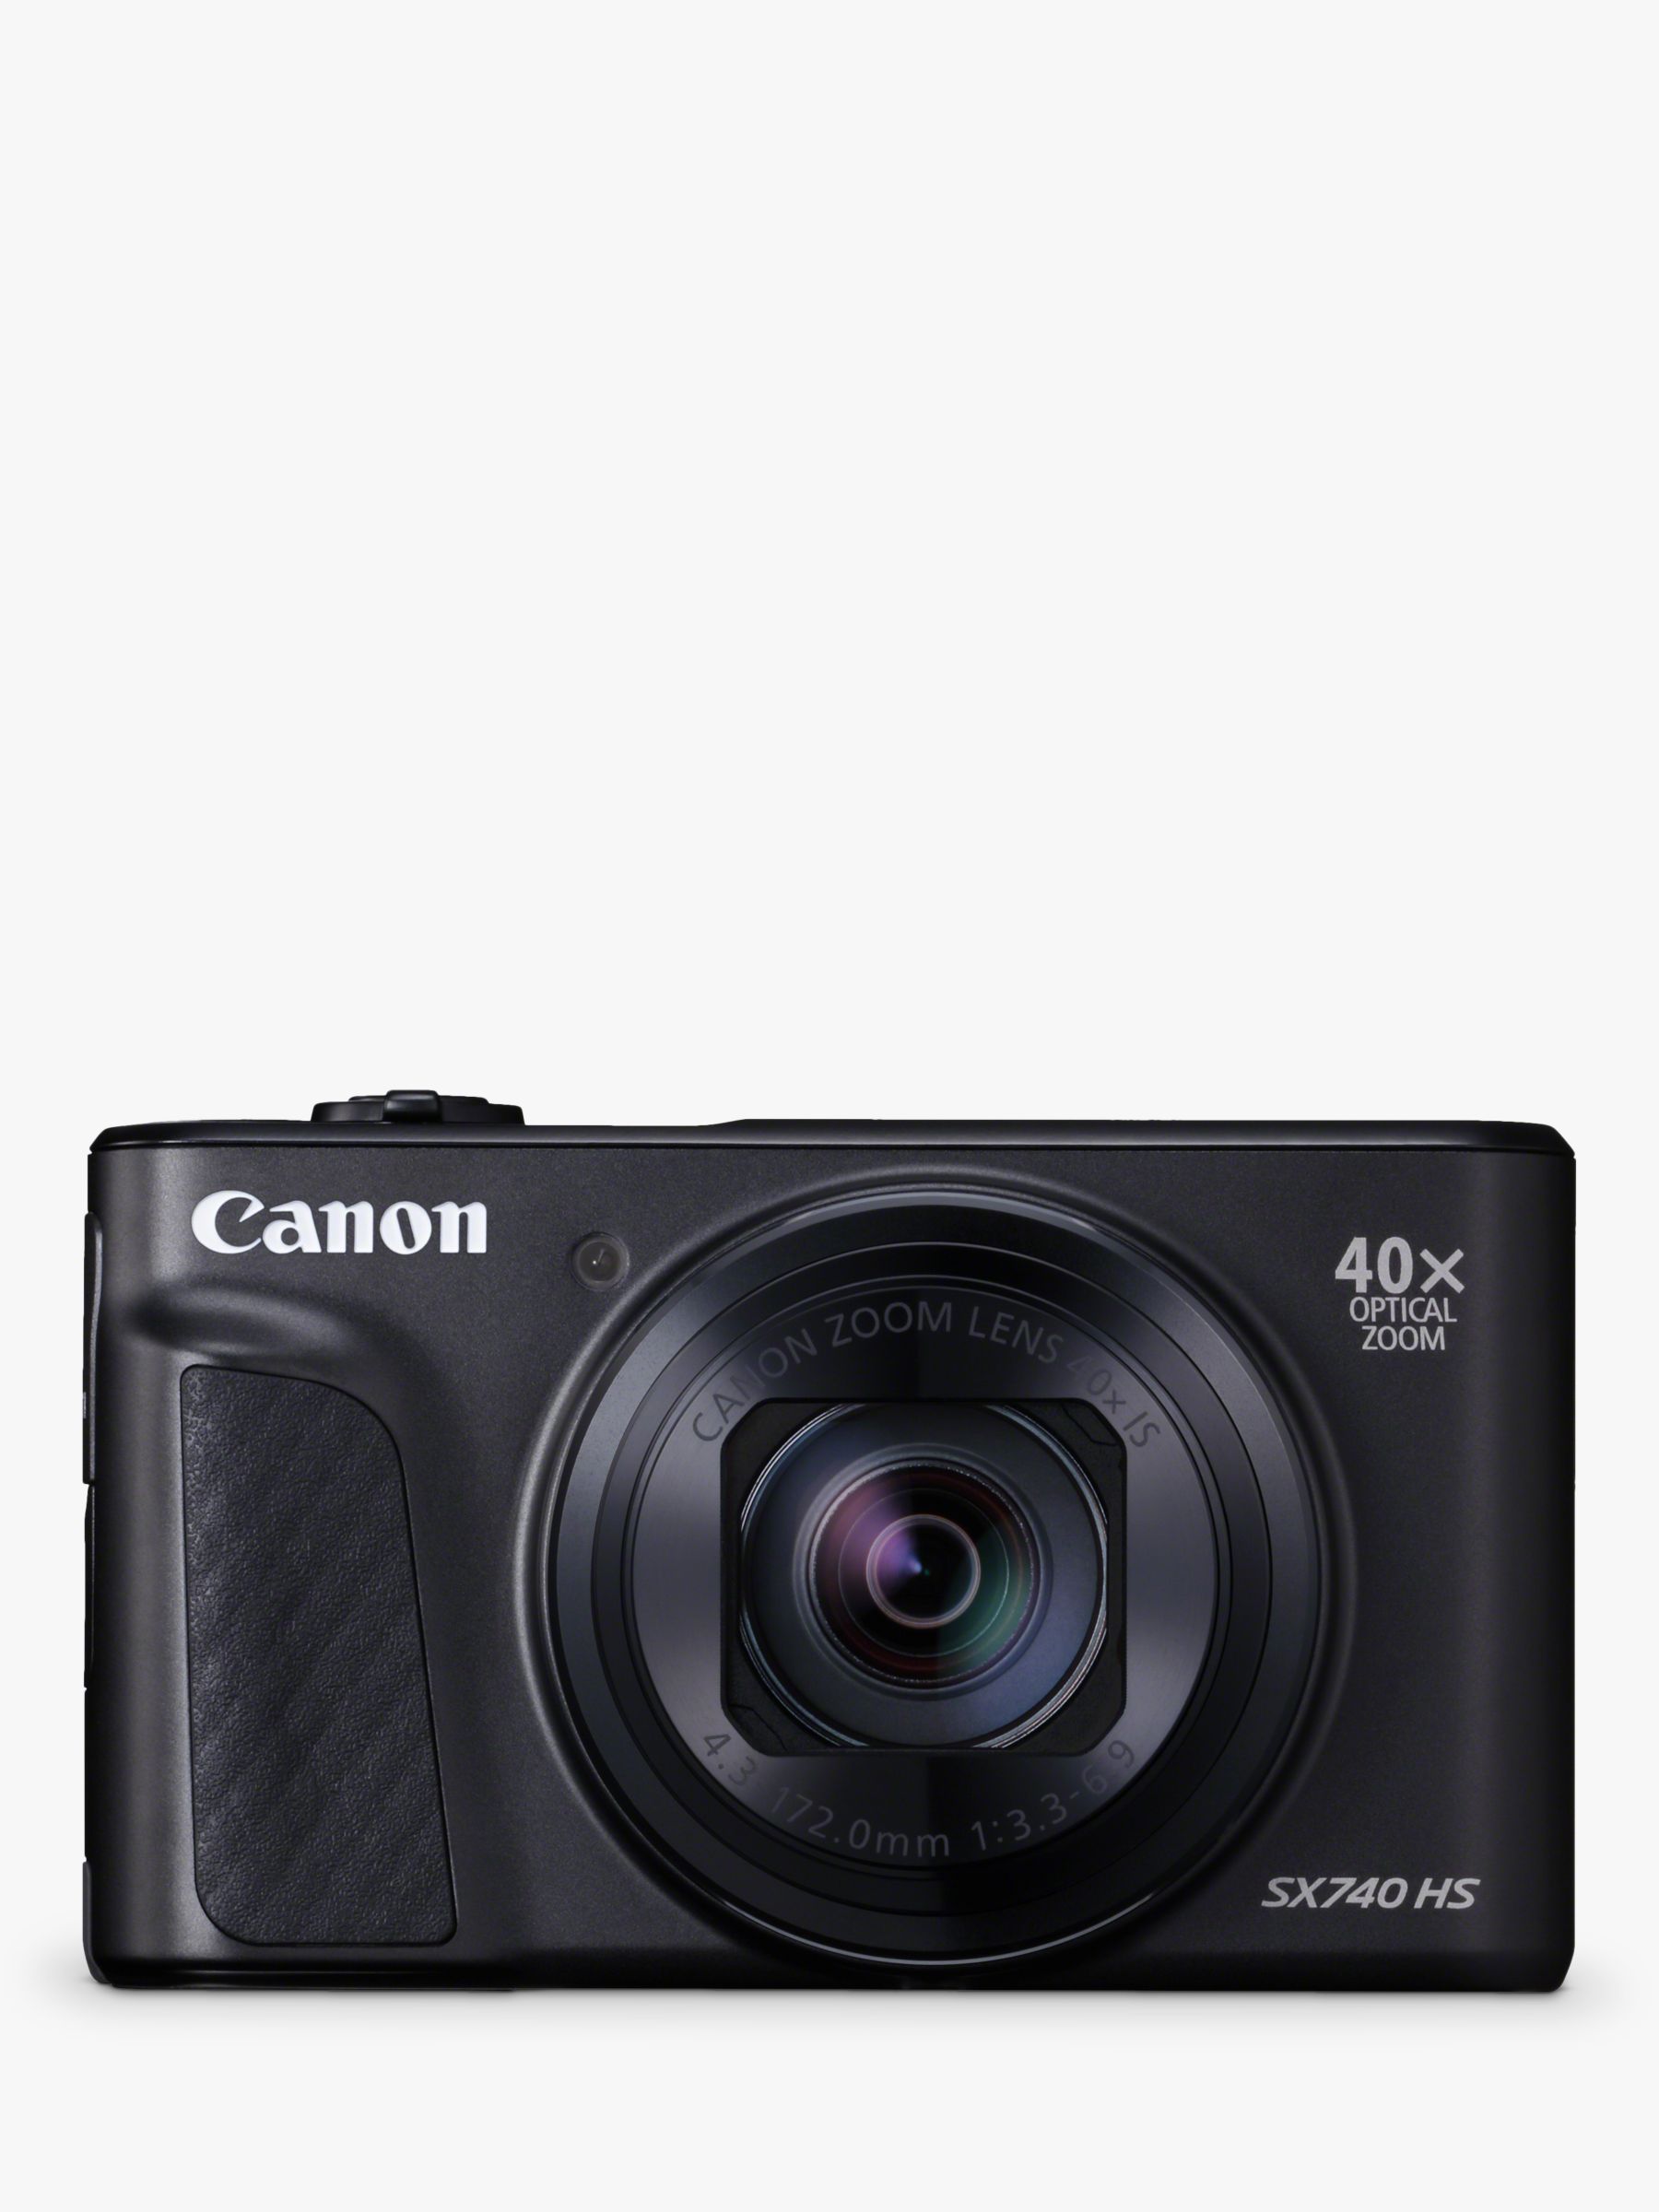 Canon PowerShot SX740 HS Digital Camera, 4K Ultra HD, 20.3MP, 40x Optical Zoom, Wi-Fi, Bluetooth, 3 Tiltable Screen